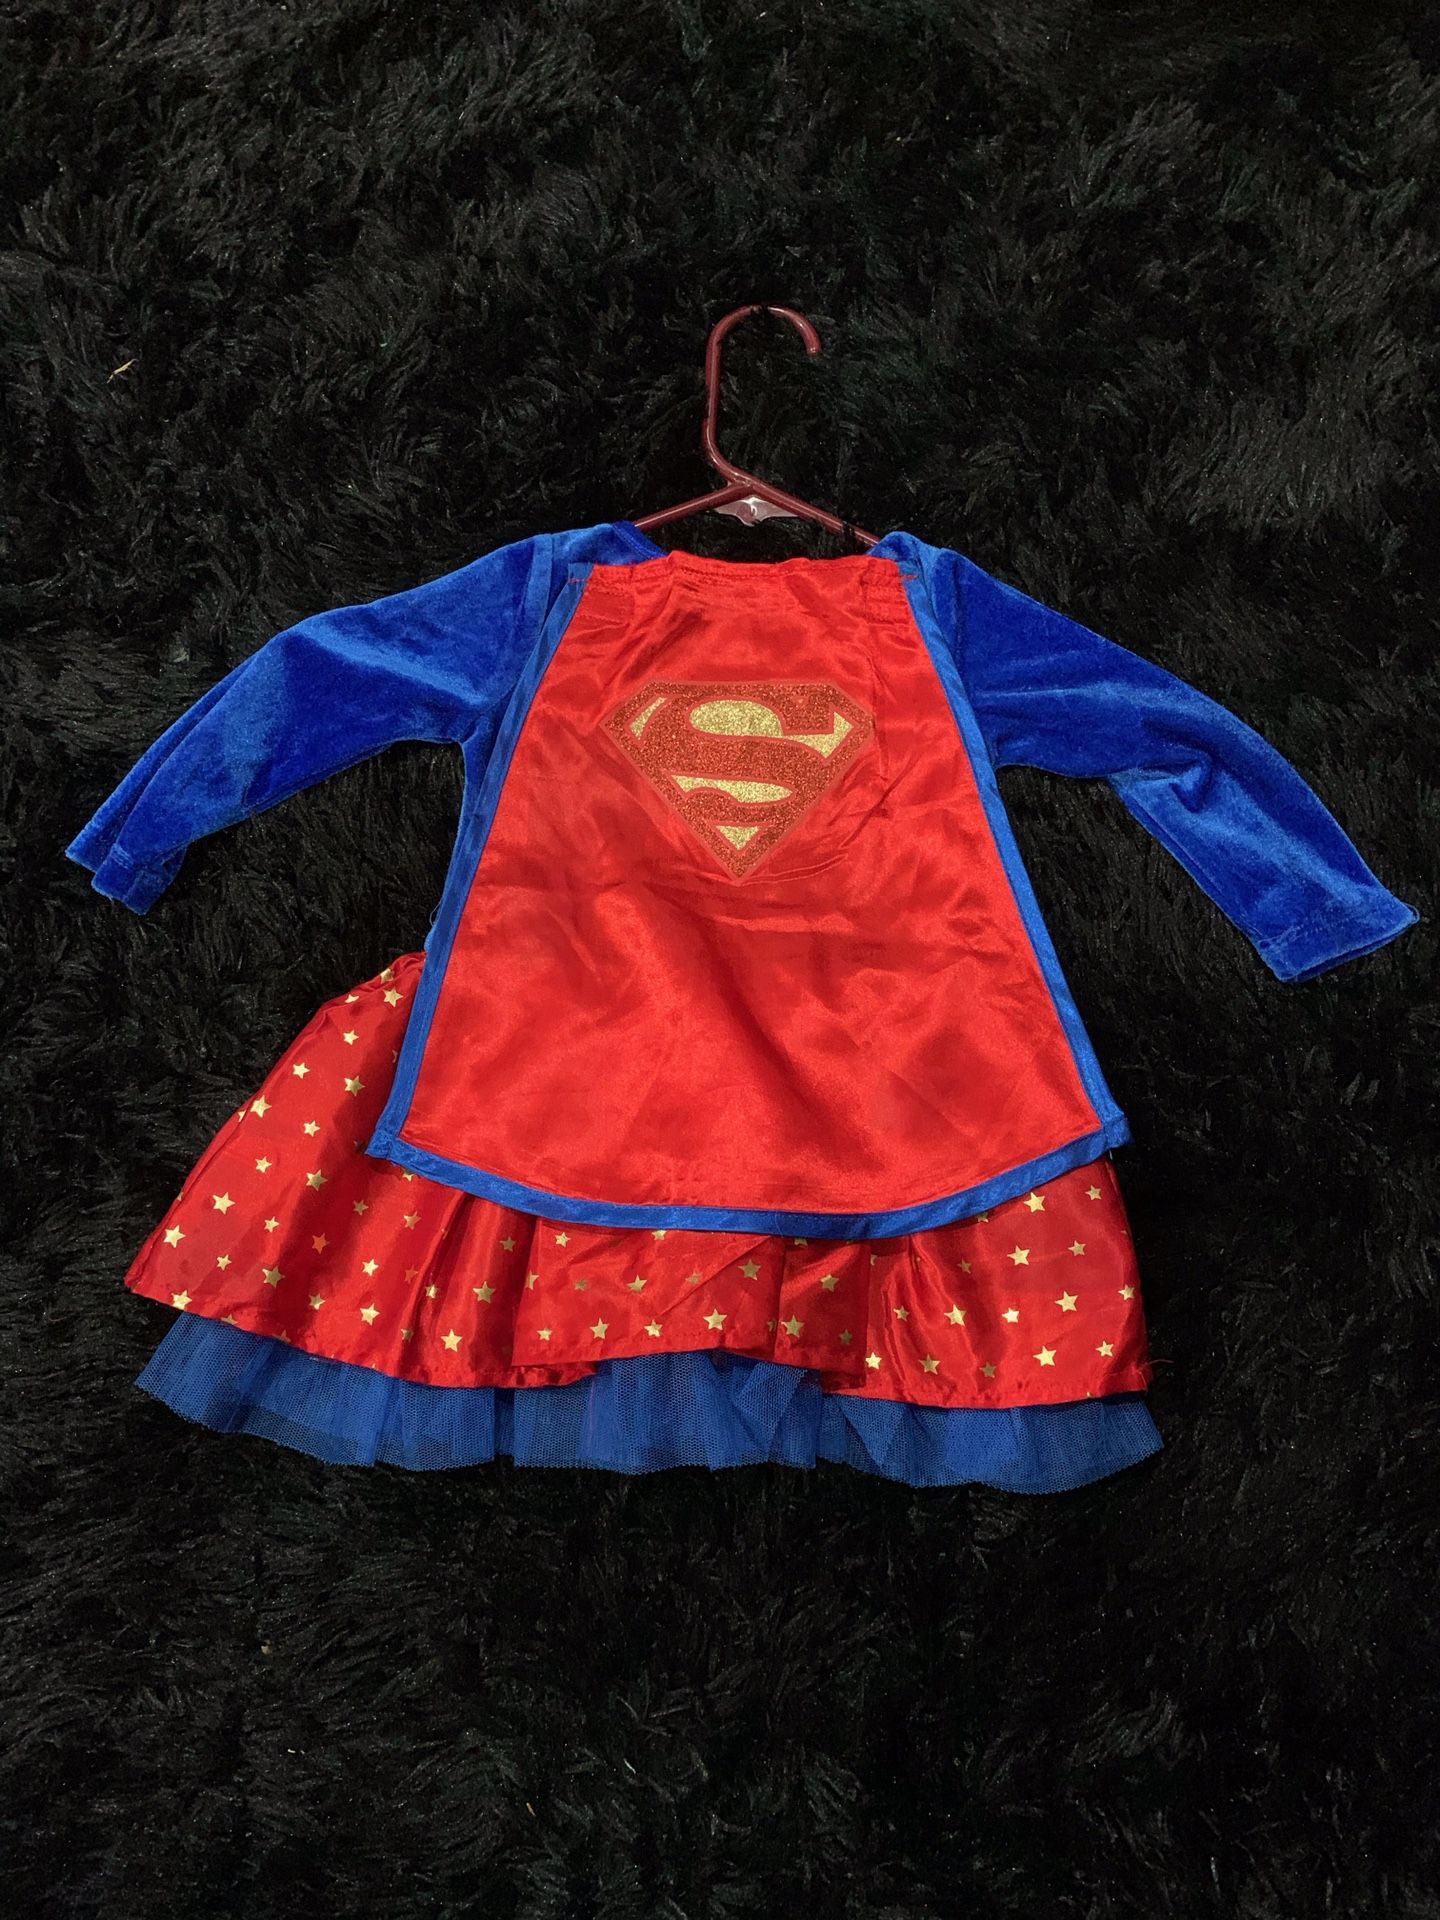 Supergirl Excellent Condition size 12-18months $10